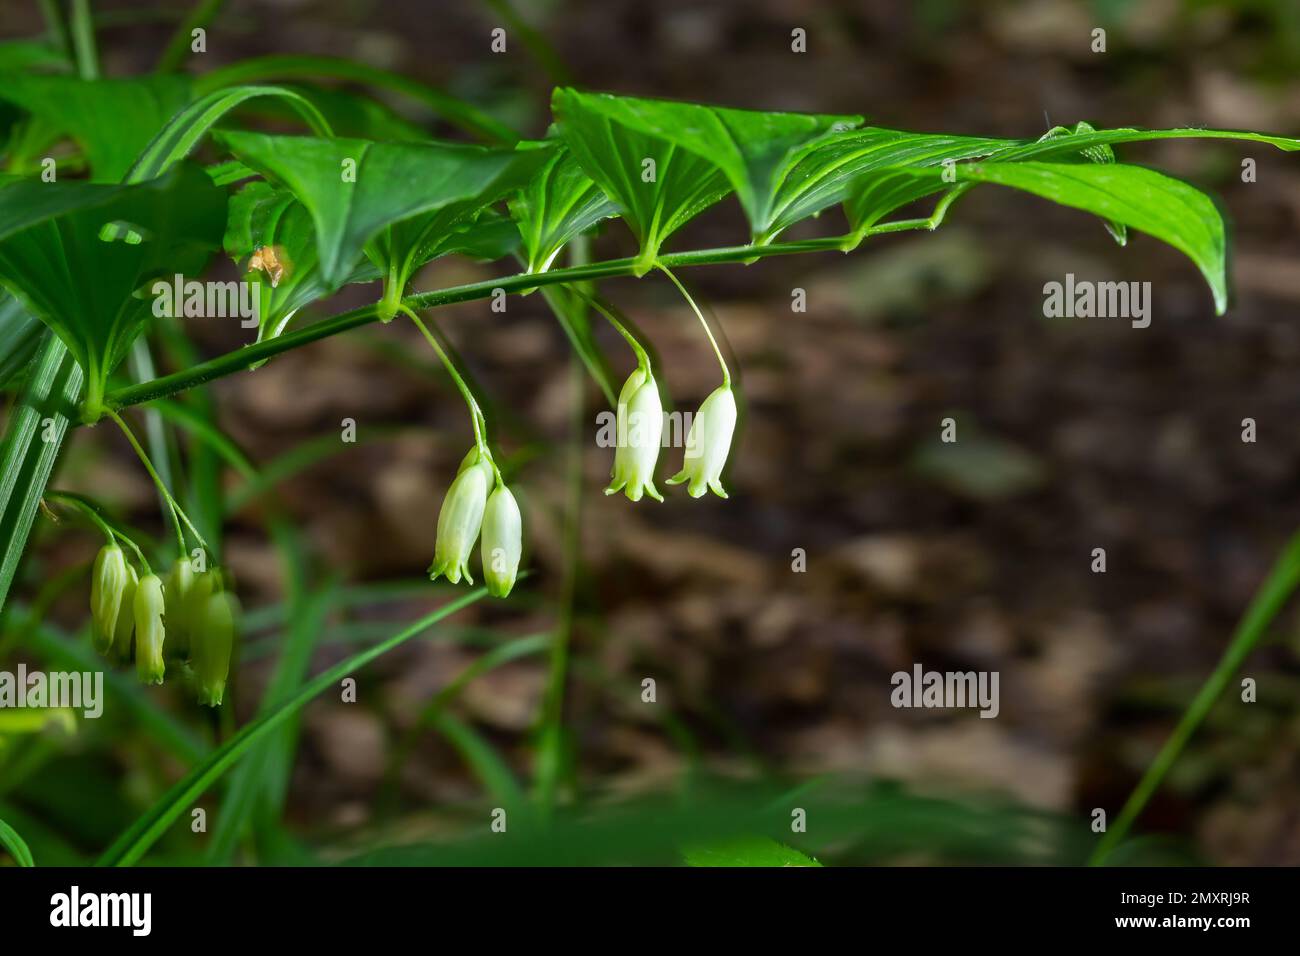 Polygonatum odoratum flowers hanging at regular intervals. The Korean name of this plant, which scientific name is the Polygonatum odoratum, is called Stock Photo